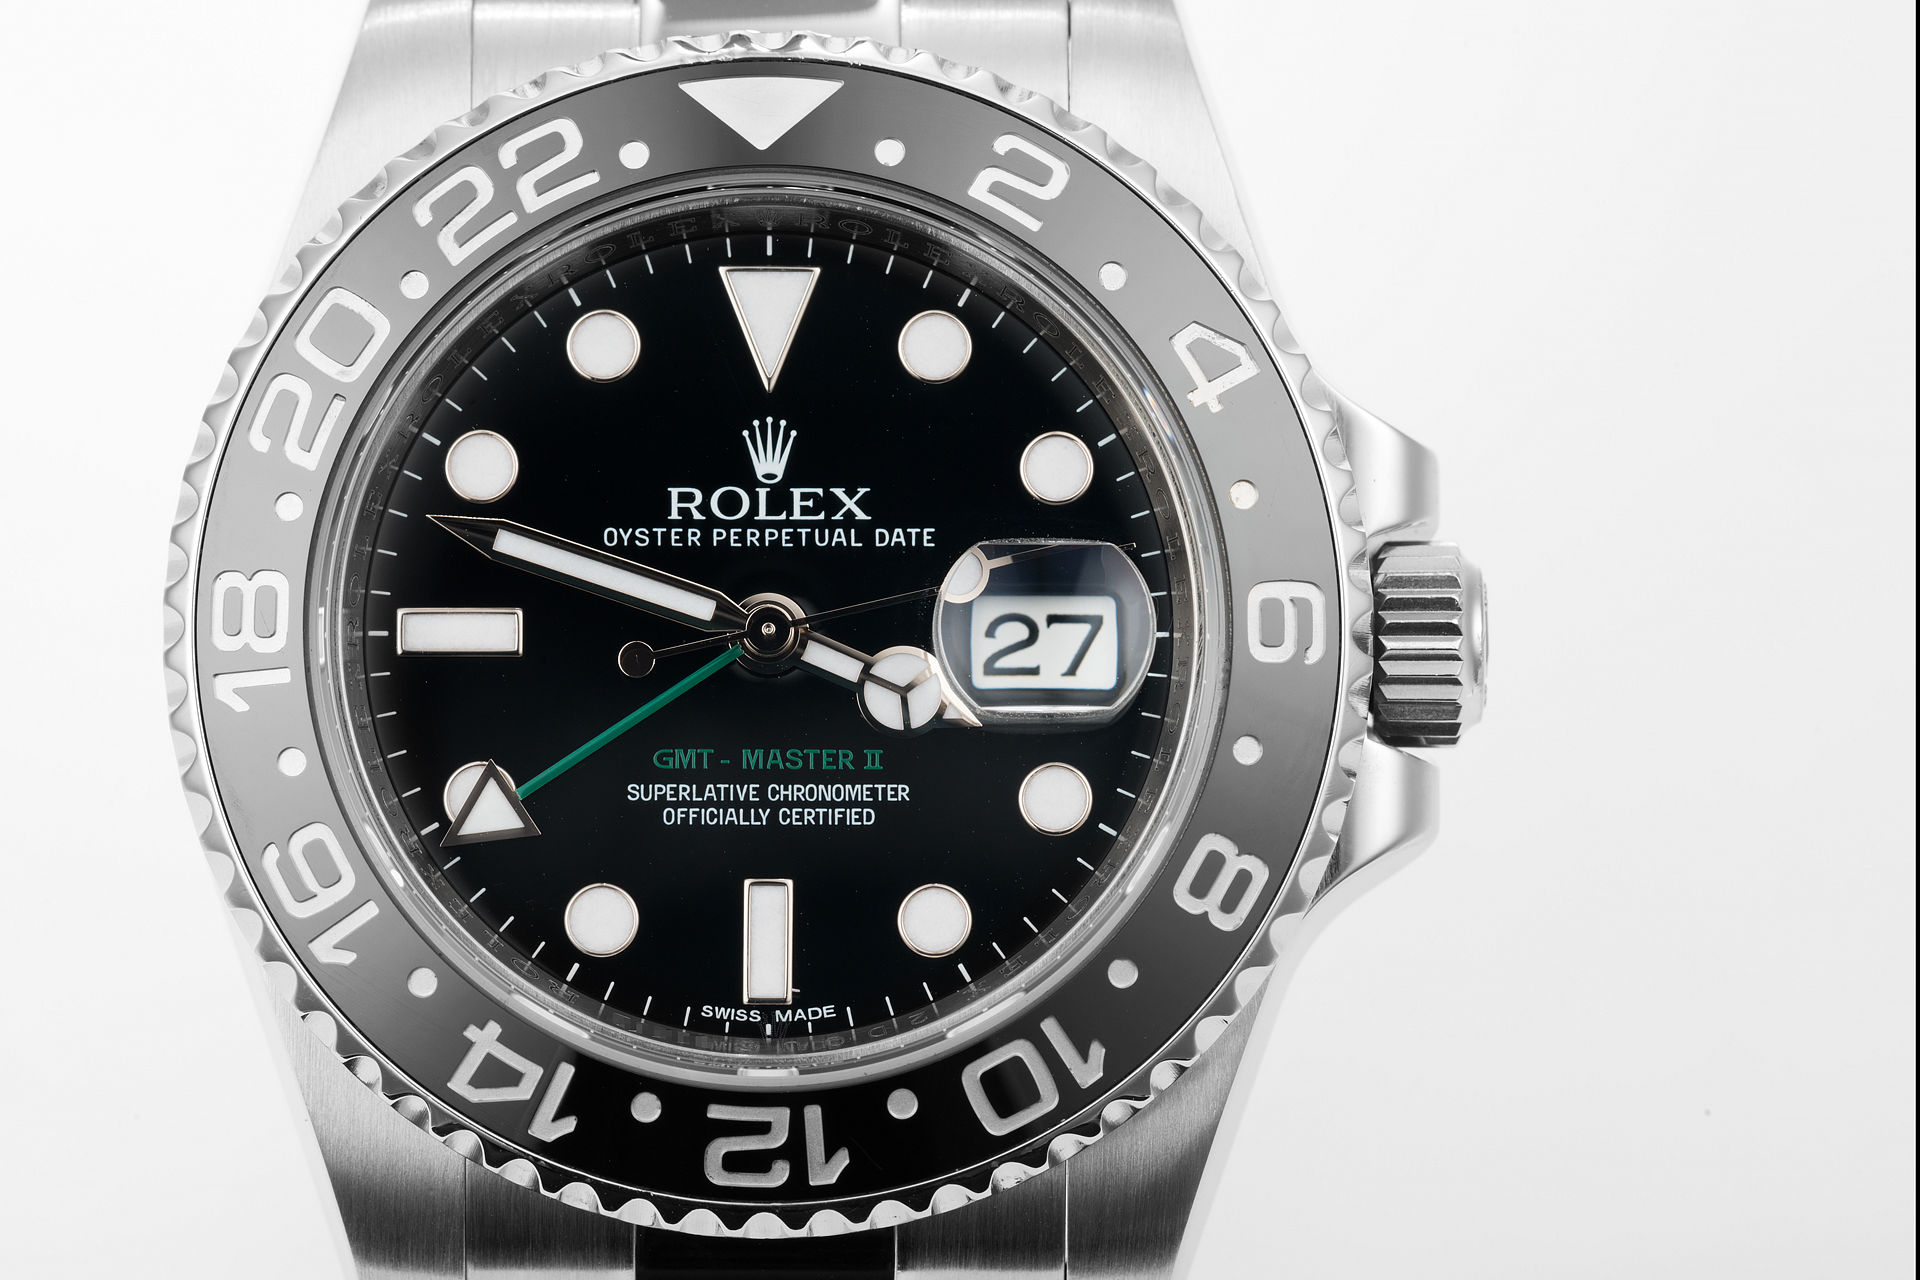 ref 116710LN | 'Full Set' UK Retailed | Rolex GMT-Master II